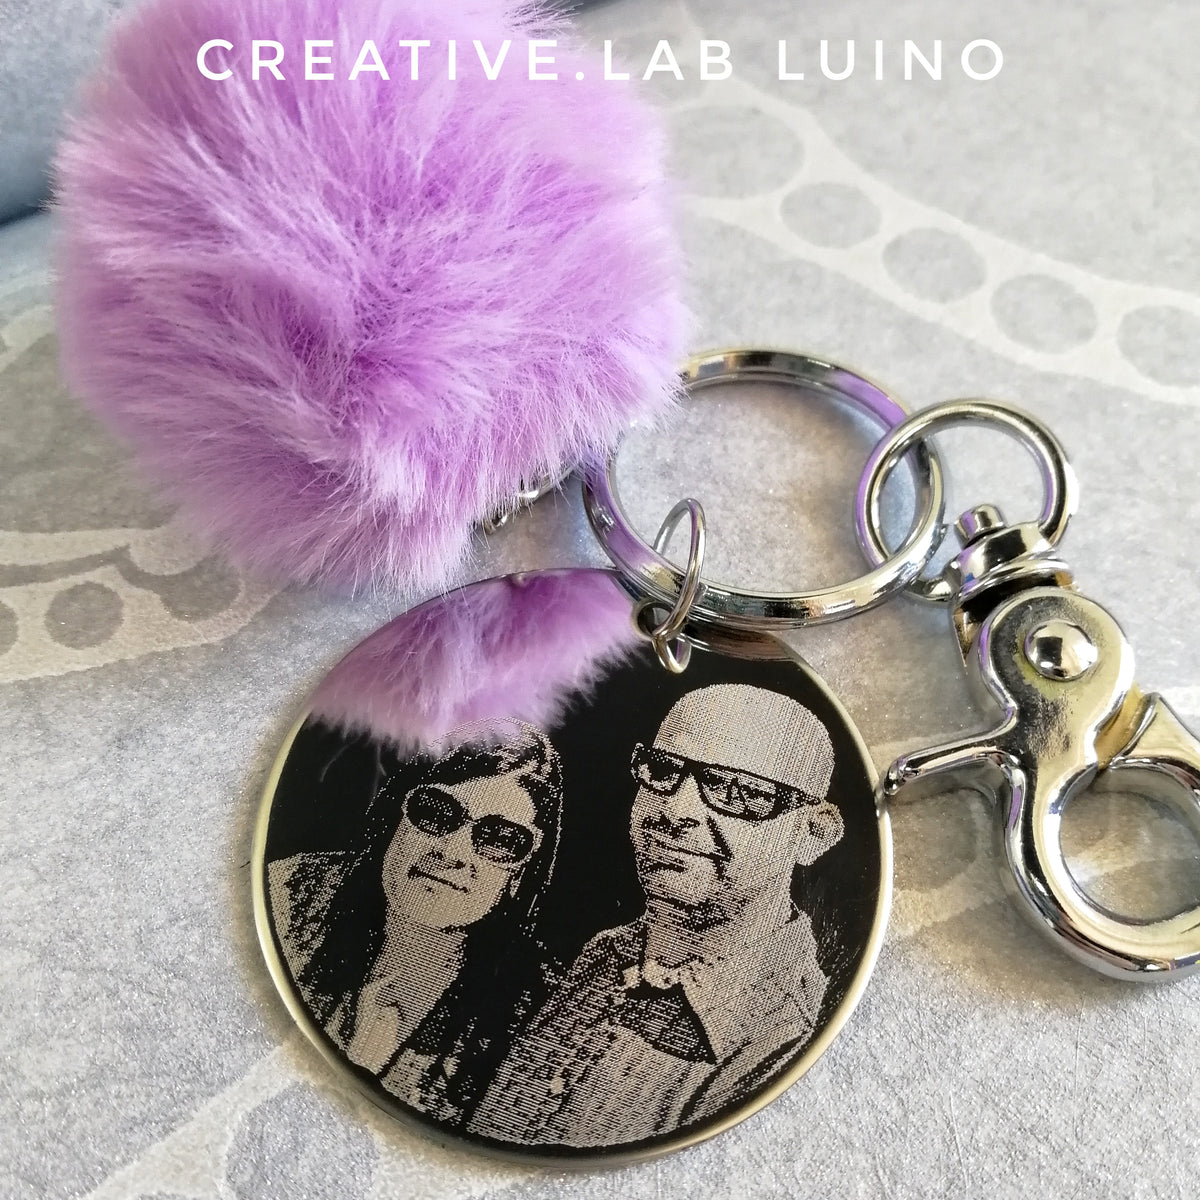 Creative.Lab Shop – Creative.Lab Shop Luino